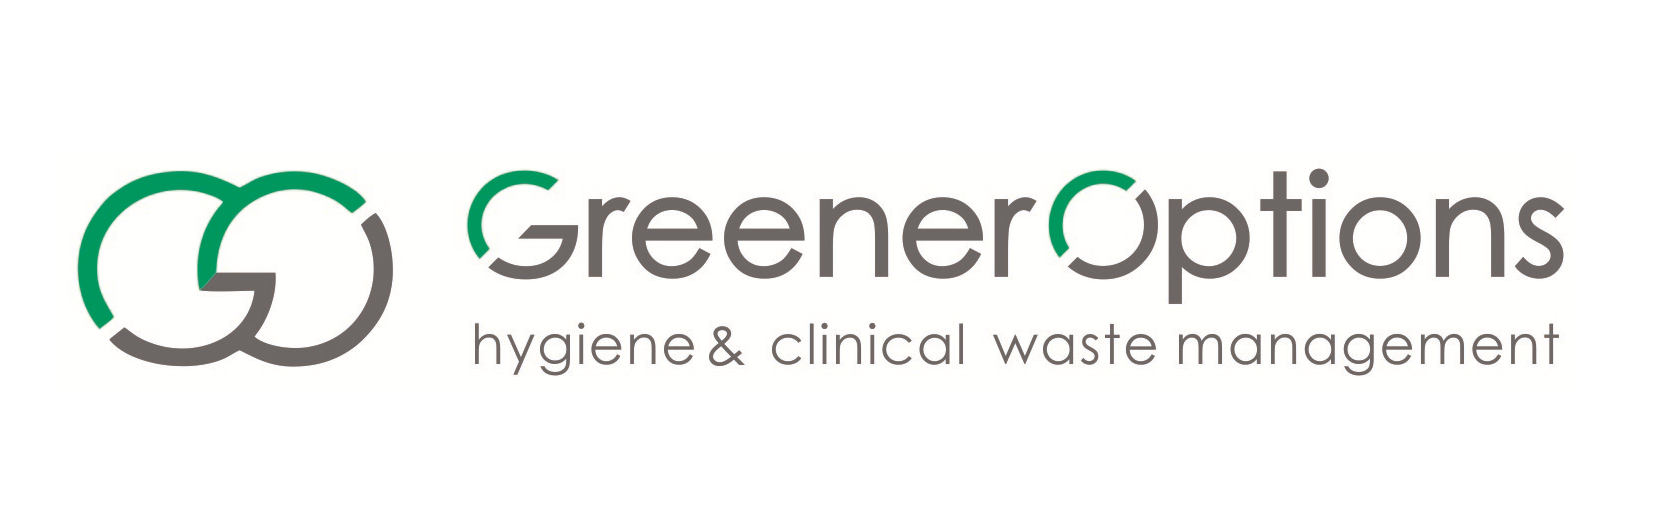 Greener Options logo